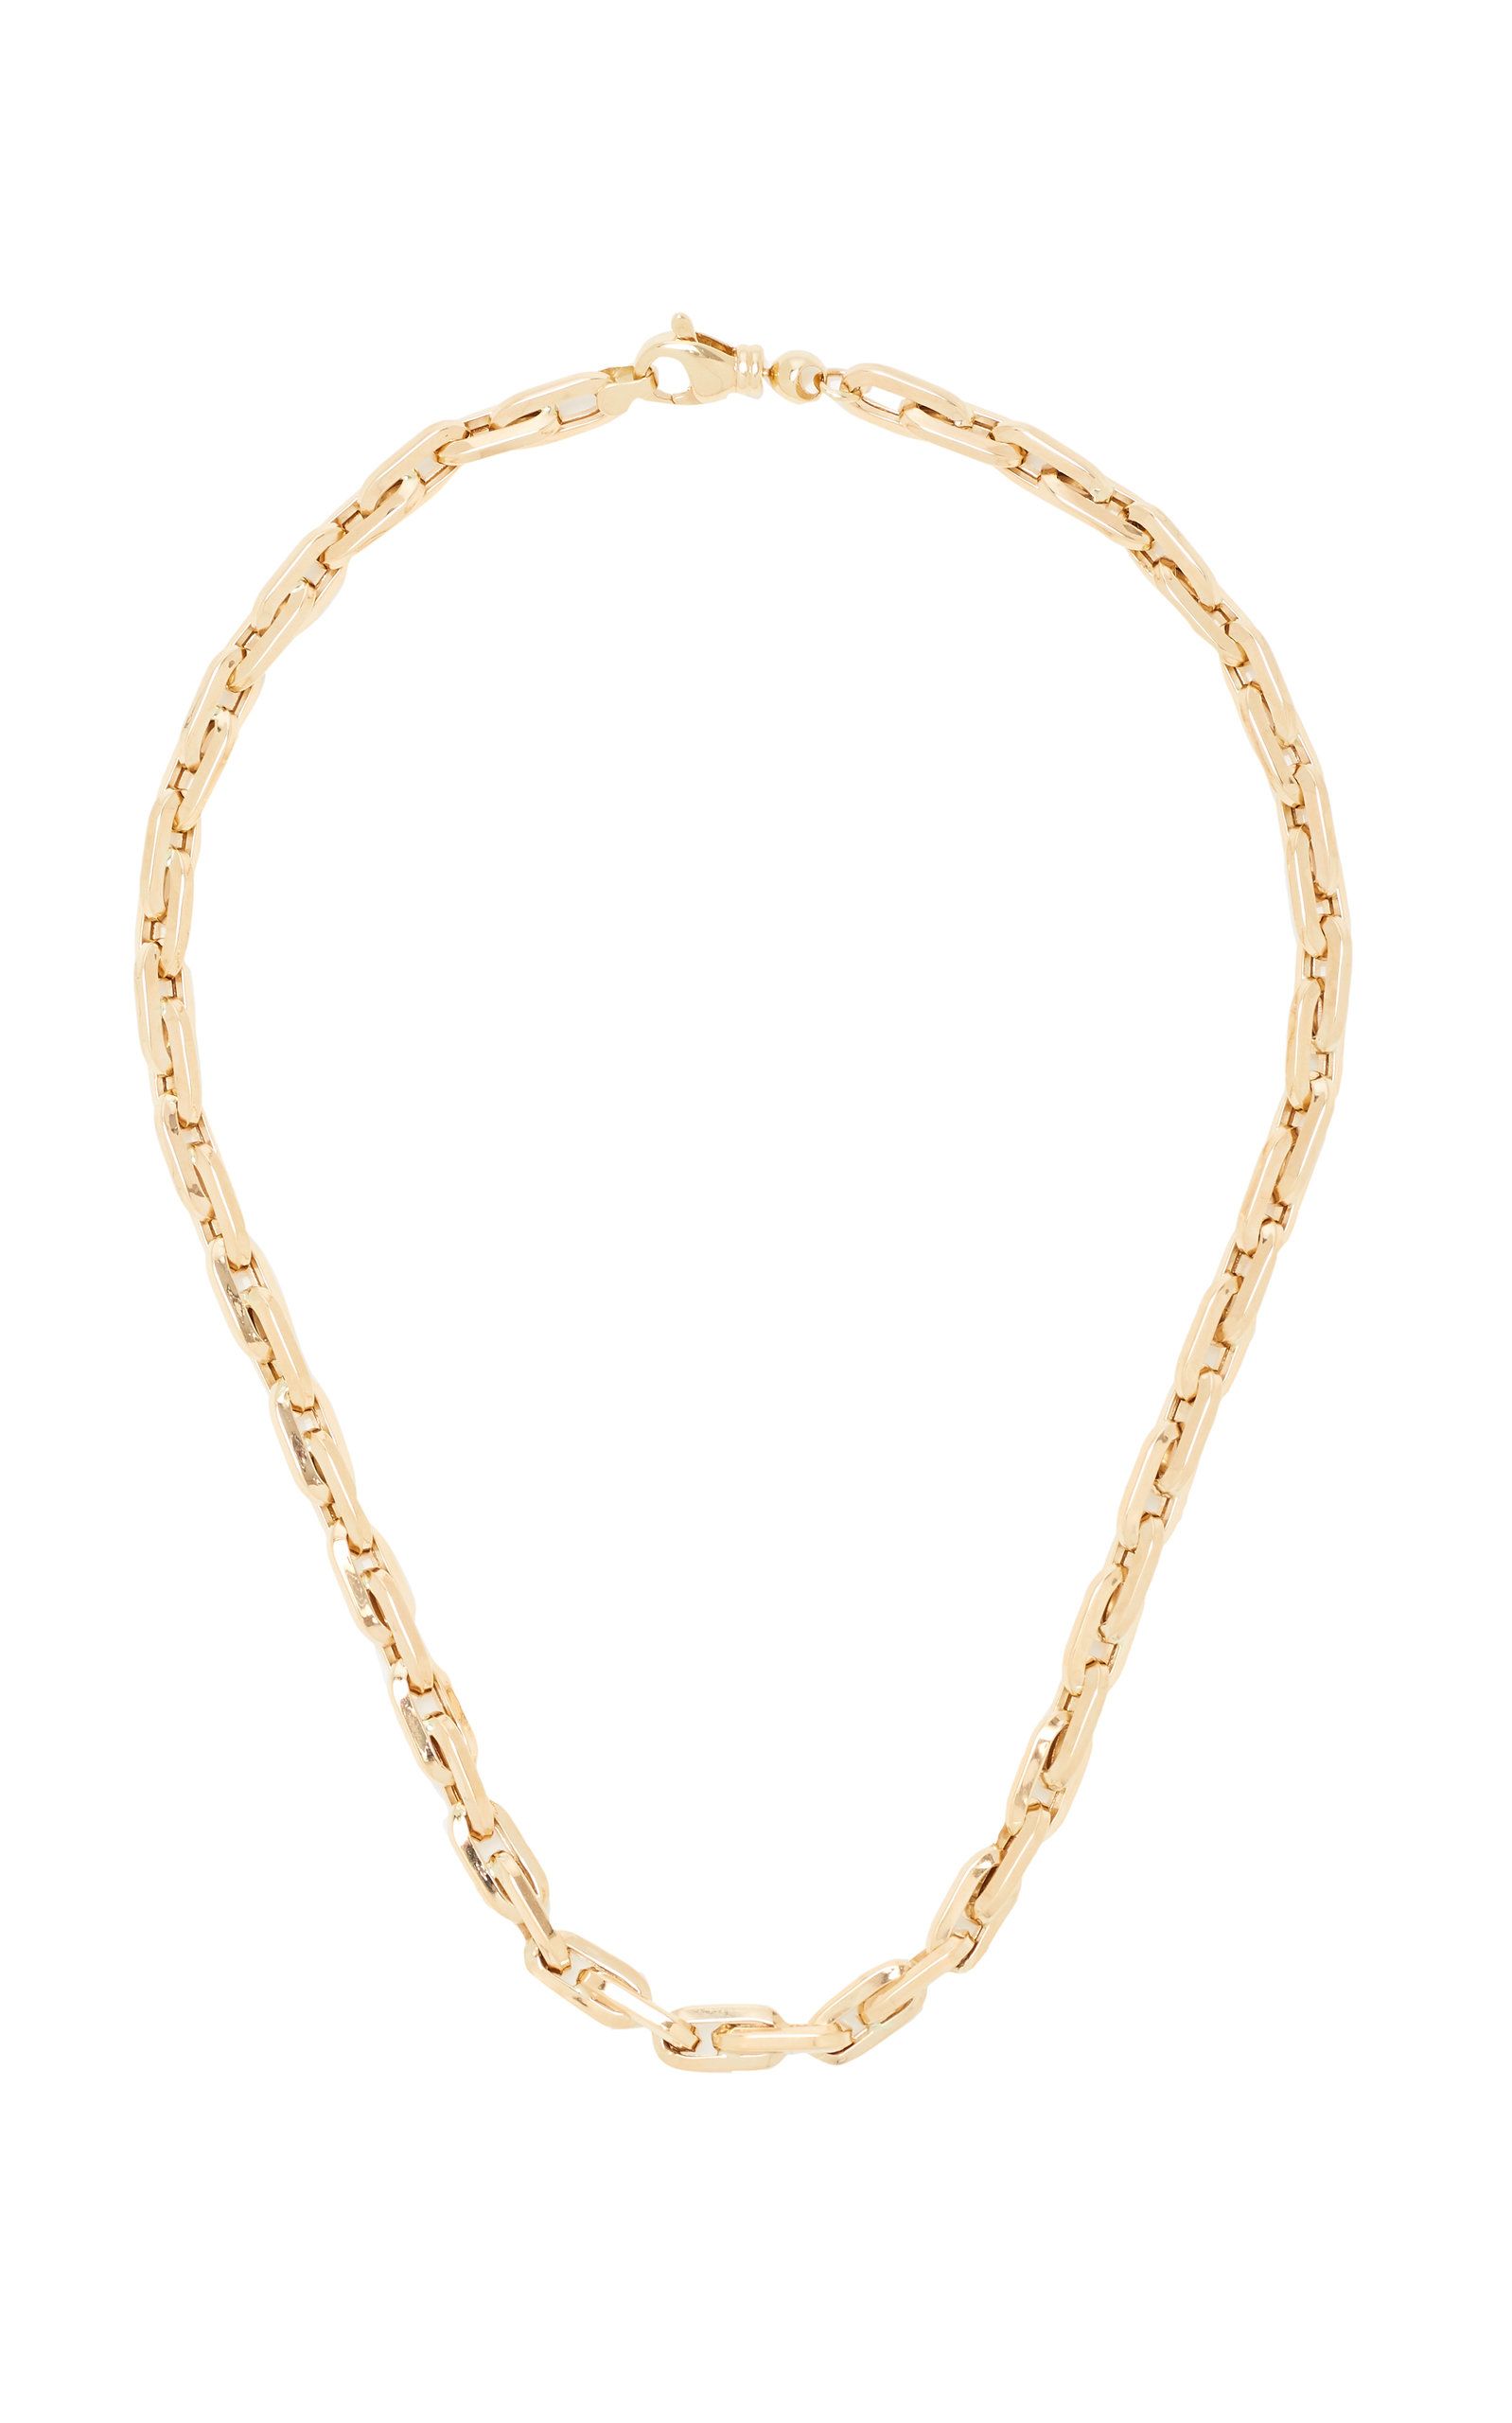 Adina Reyter - Women's 14K Yellow Gold Cable Chain Necklace - Gold - Moda Operandi - Gifts For Her | Moda Operandi (Global)